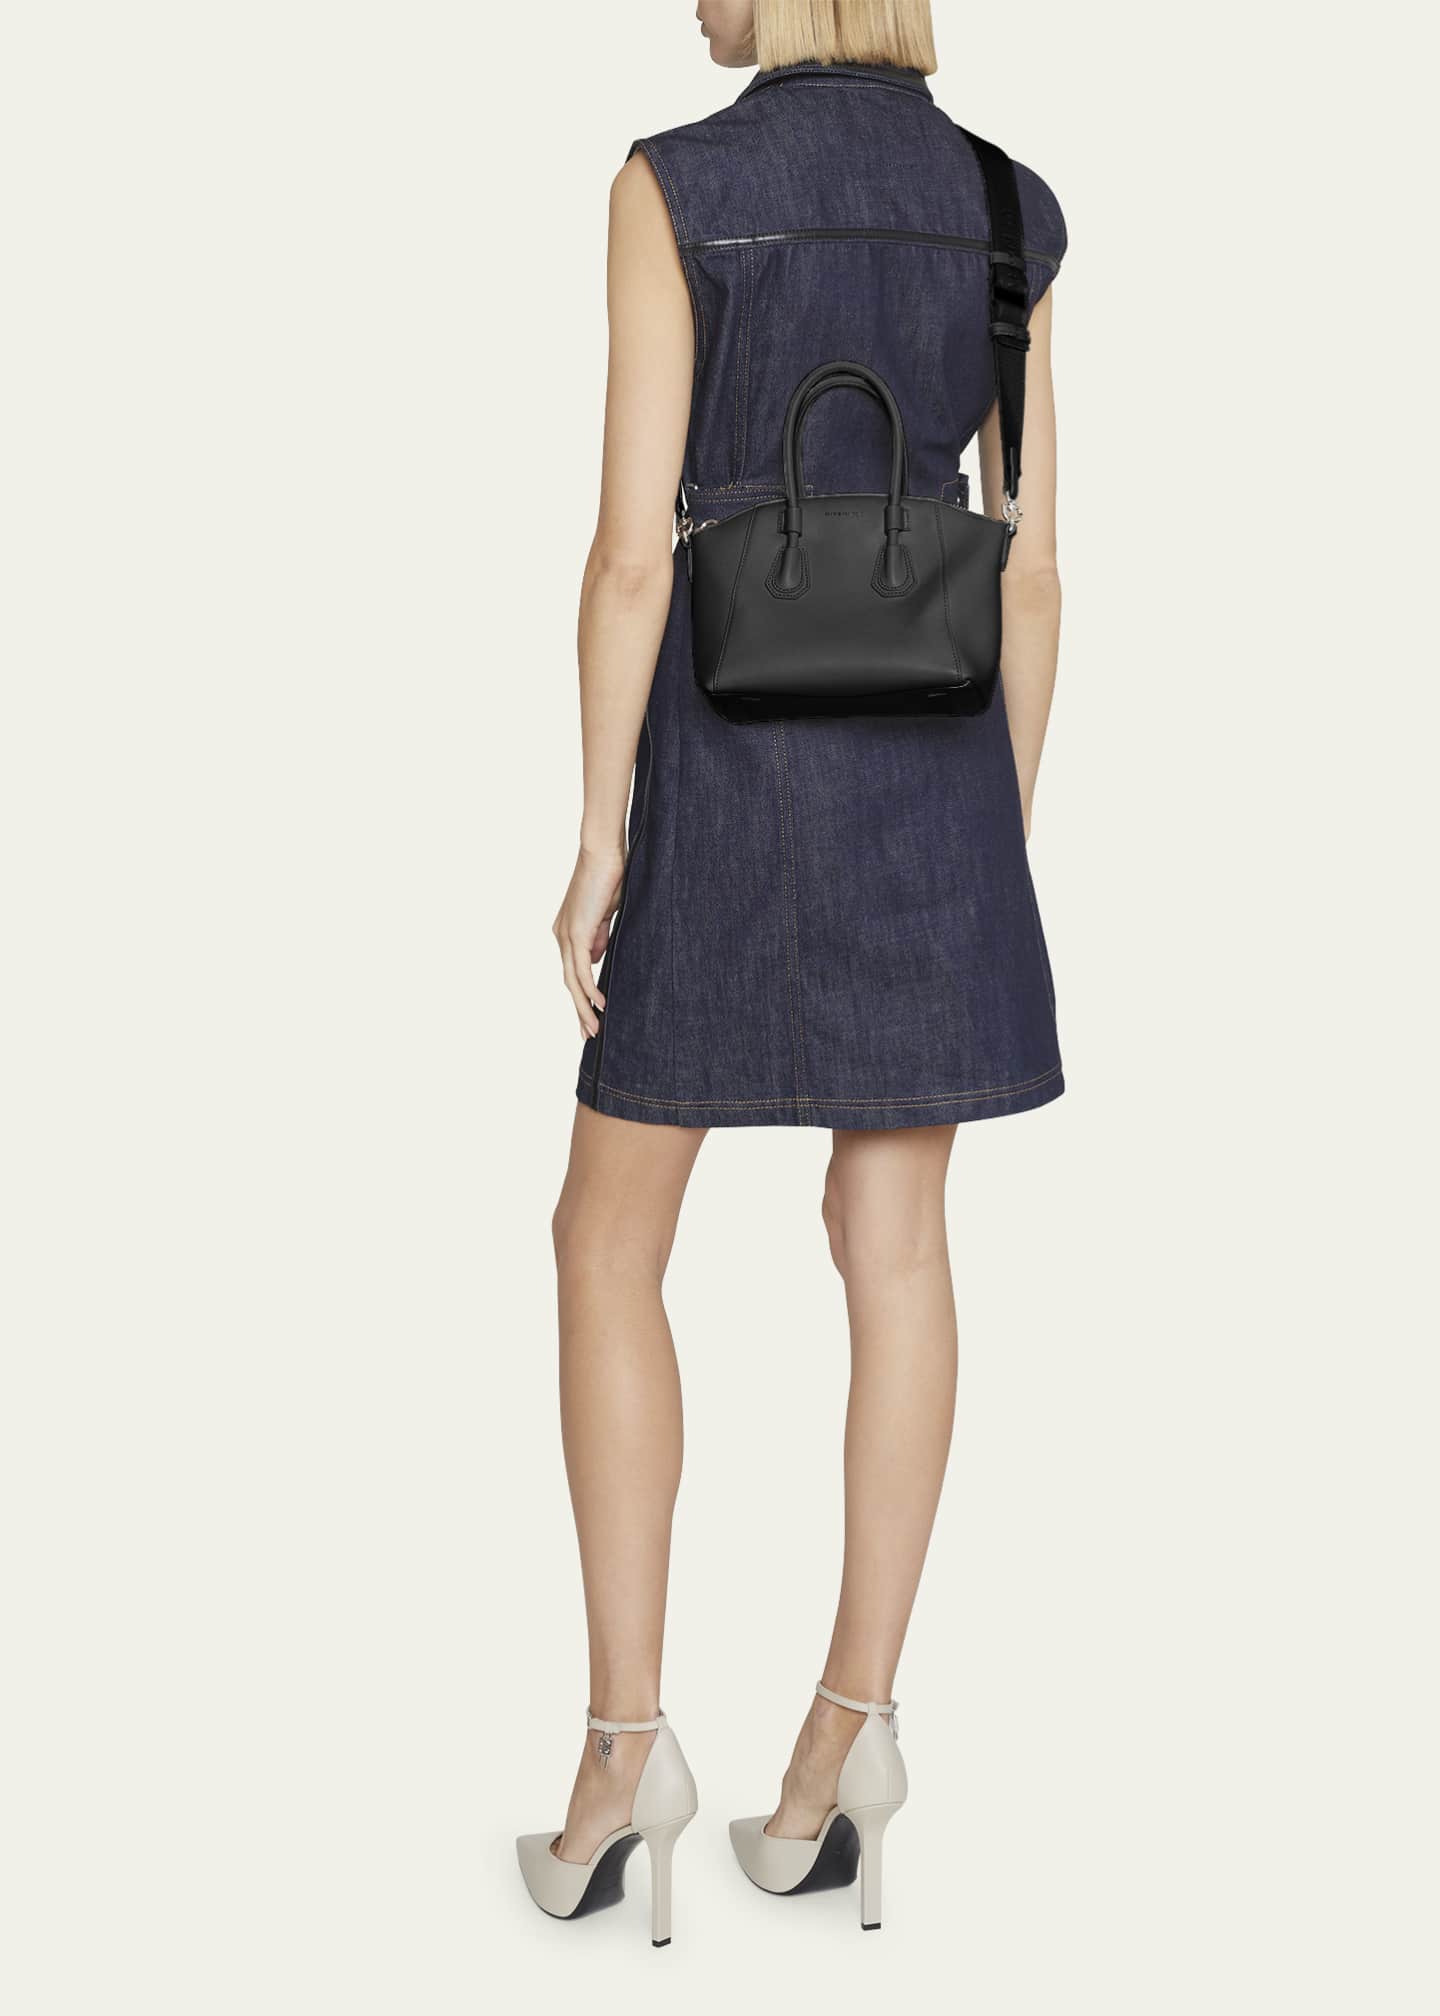 Givenchy Antigona Small Shoulder Bag